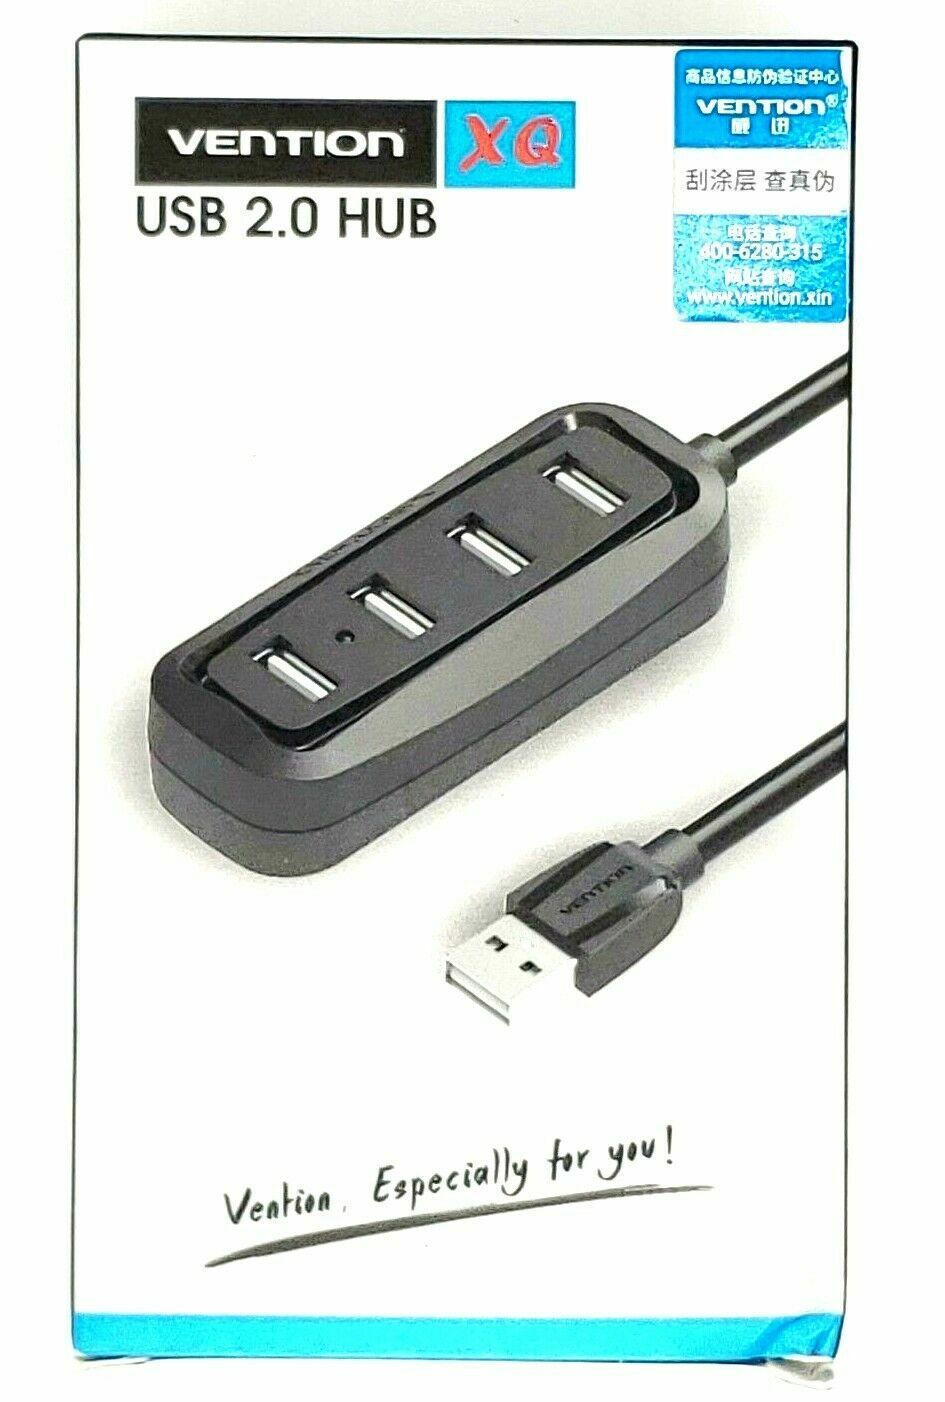 Vention USB HUB USB 2.0 Hub 4 Port USB Splitter with LED Indicator USB Hub